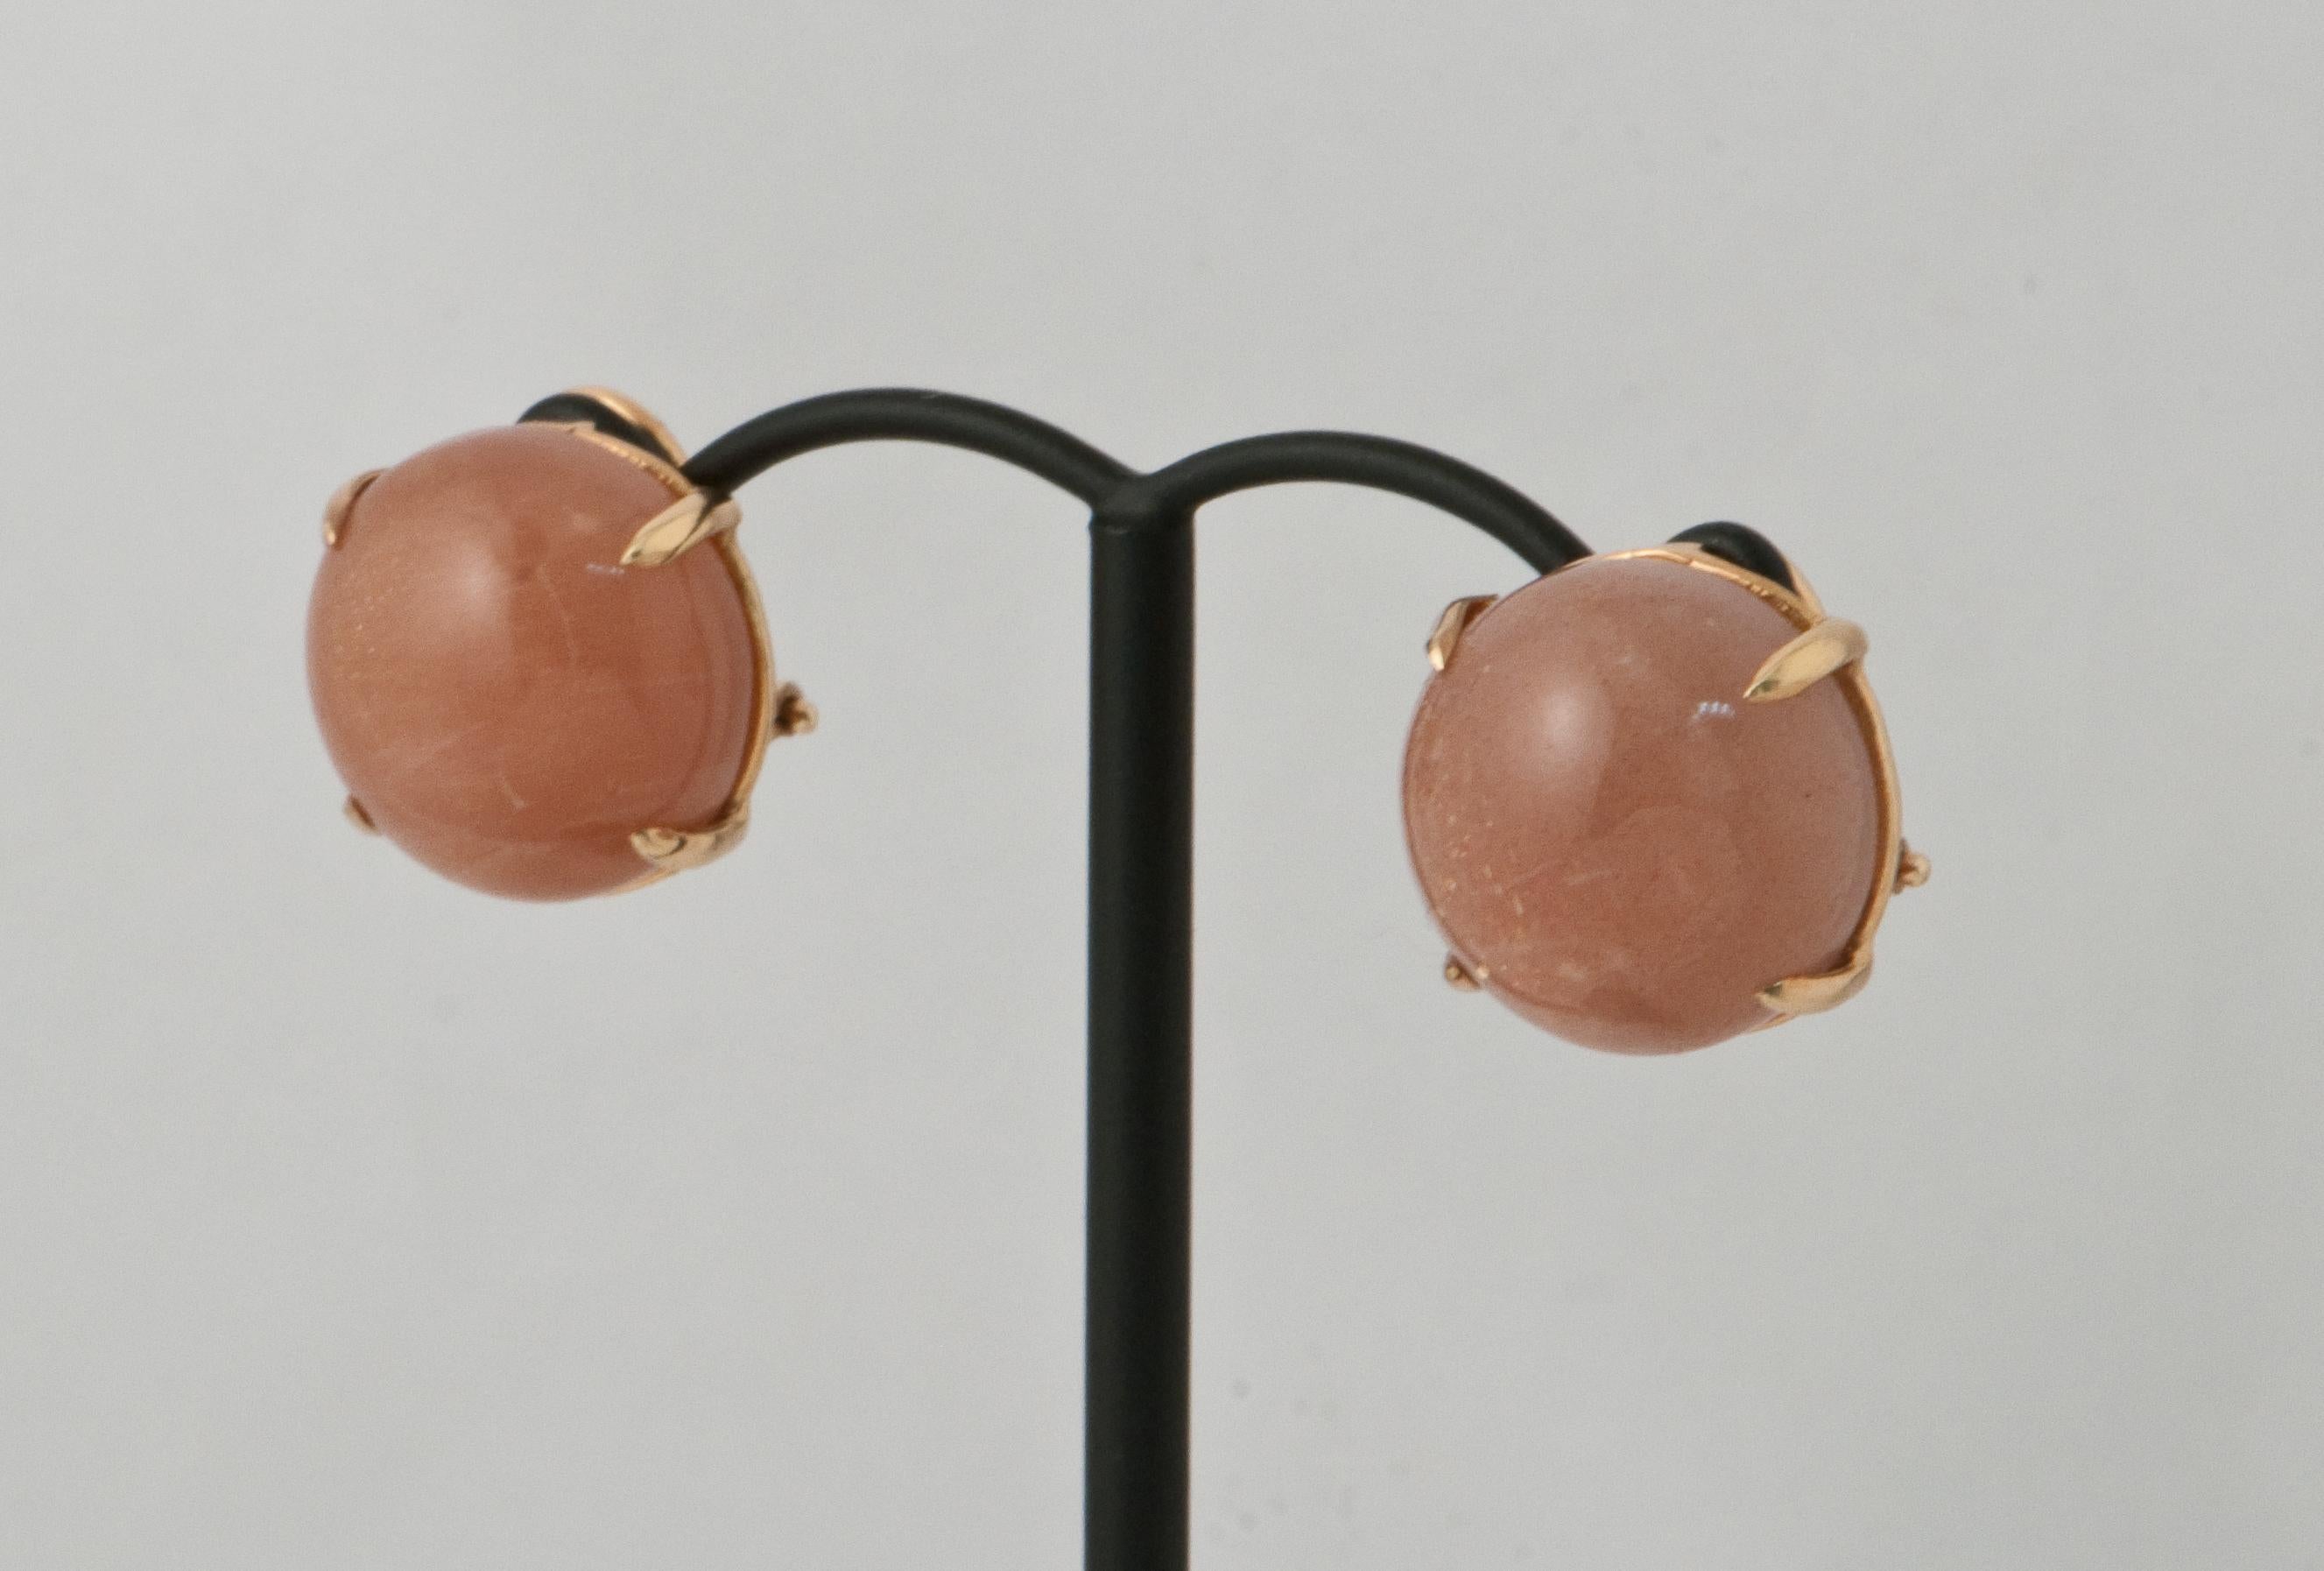 Peach Moonstone Shape round on Rose Gold Stud Earring.
Discover This Moostone shape Round on Rose Gold 18 kt
Stud Earring 
Diameter 1.4cm